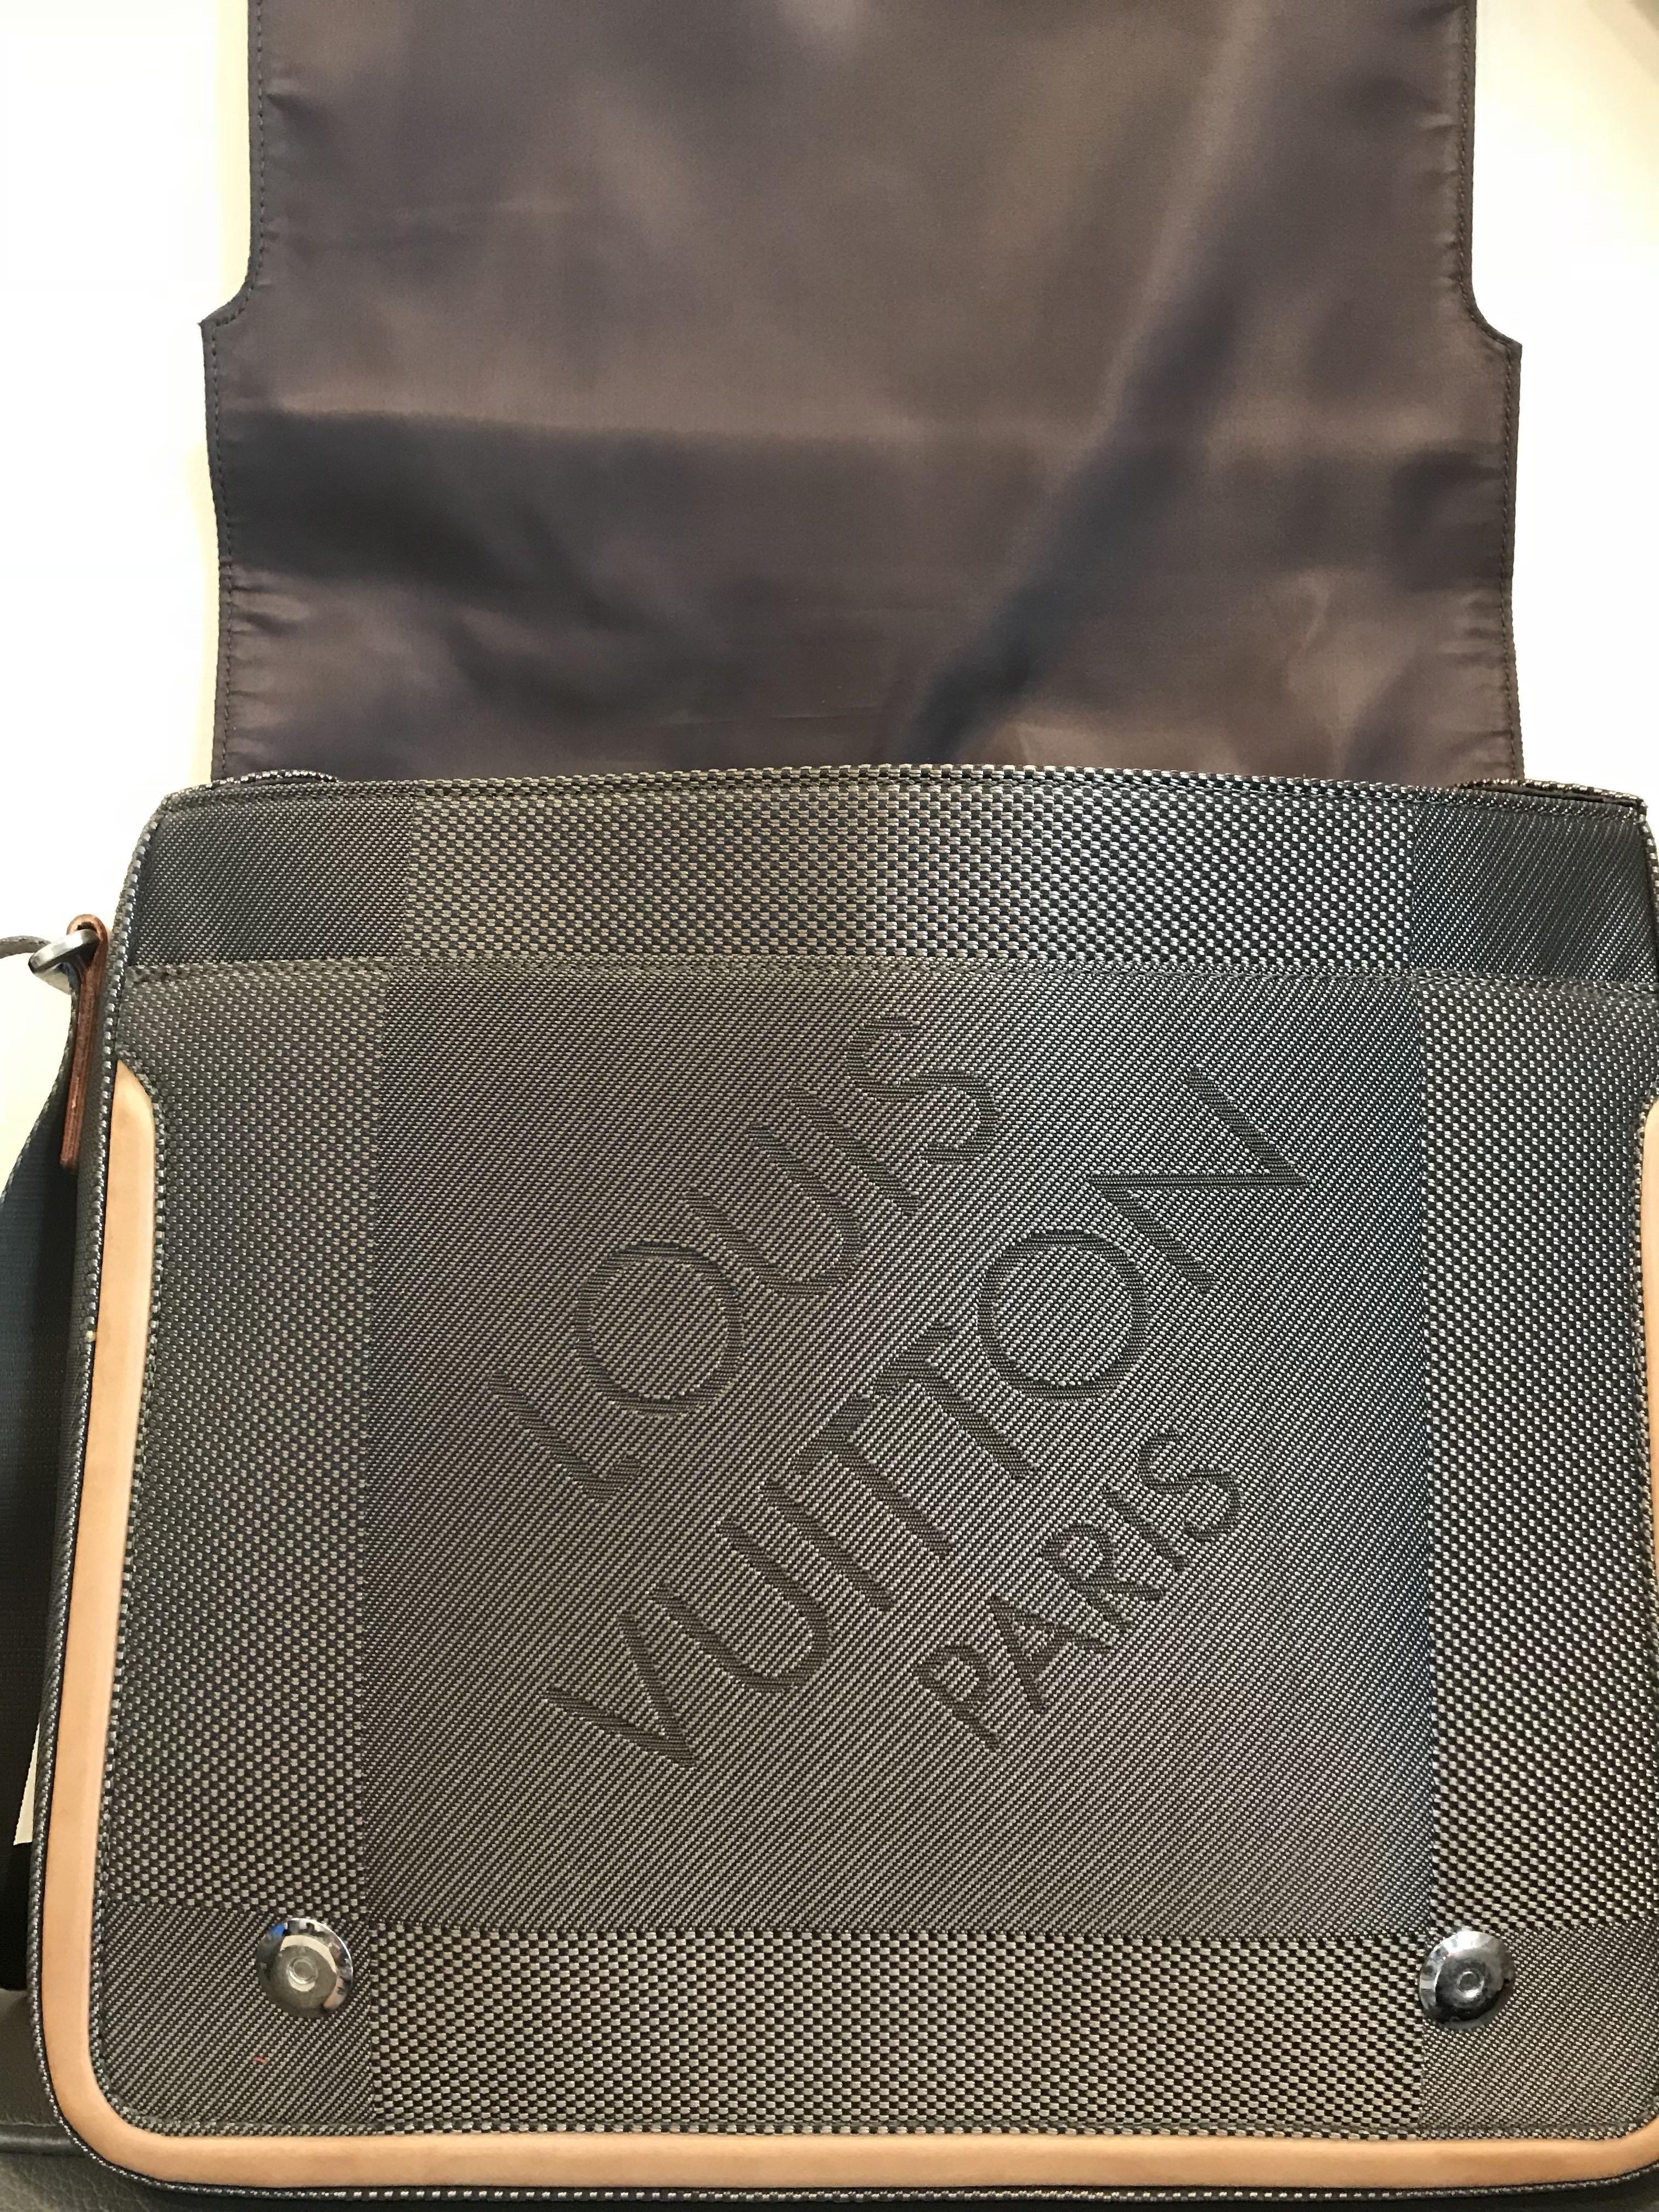 Terre damier geant messenger bag Louis Vuitton Brown in Cotton - 30182344